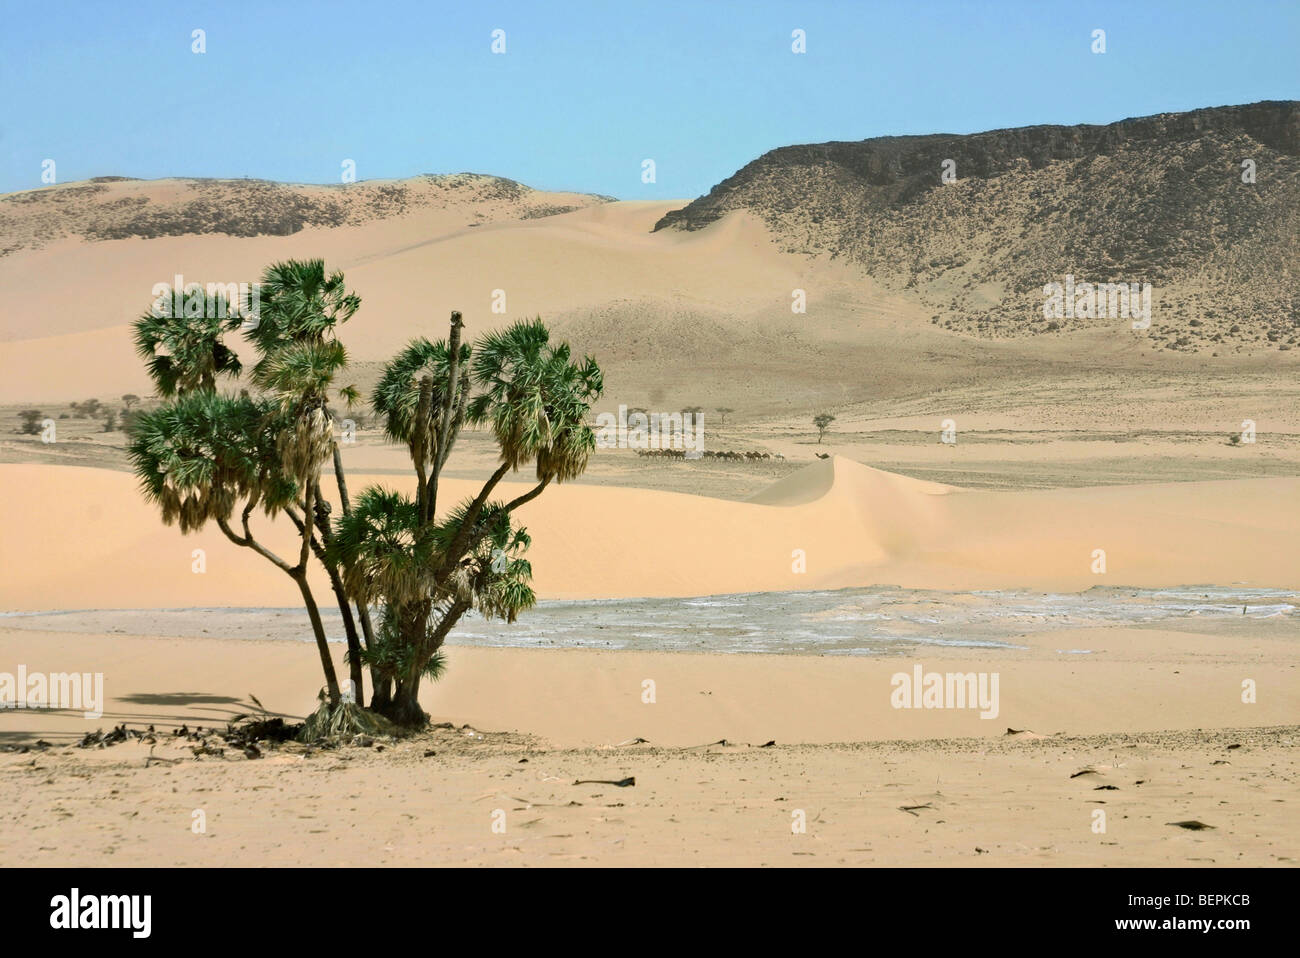 Oasi nel deserto del Sahara con dromedario cammelli (Camelus dromedarius) e Palm tree, Niger, Africa occidentale Foto Stock